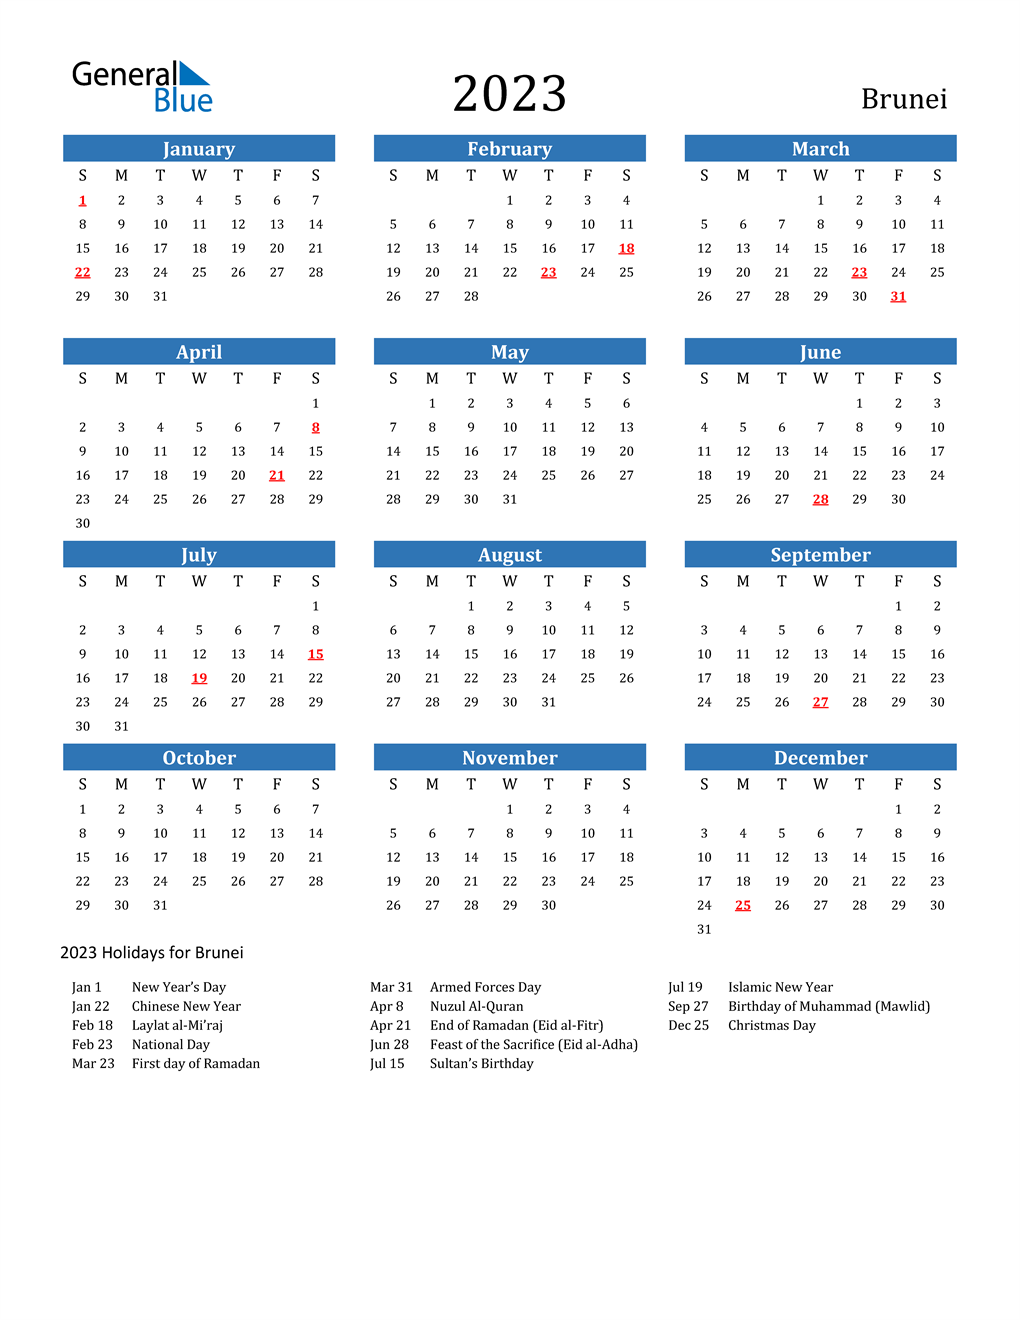 Pcsb 2022 23 Calendar 2023 Brunei Calendar With Holidays